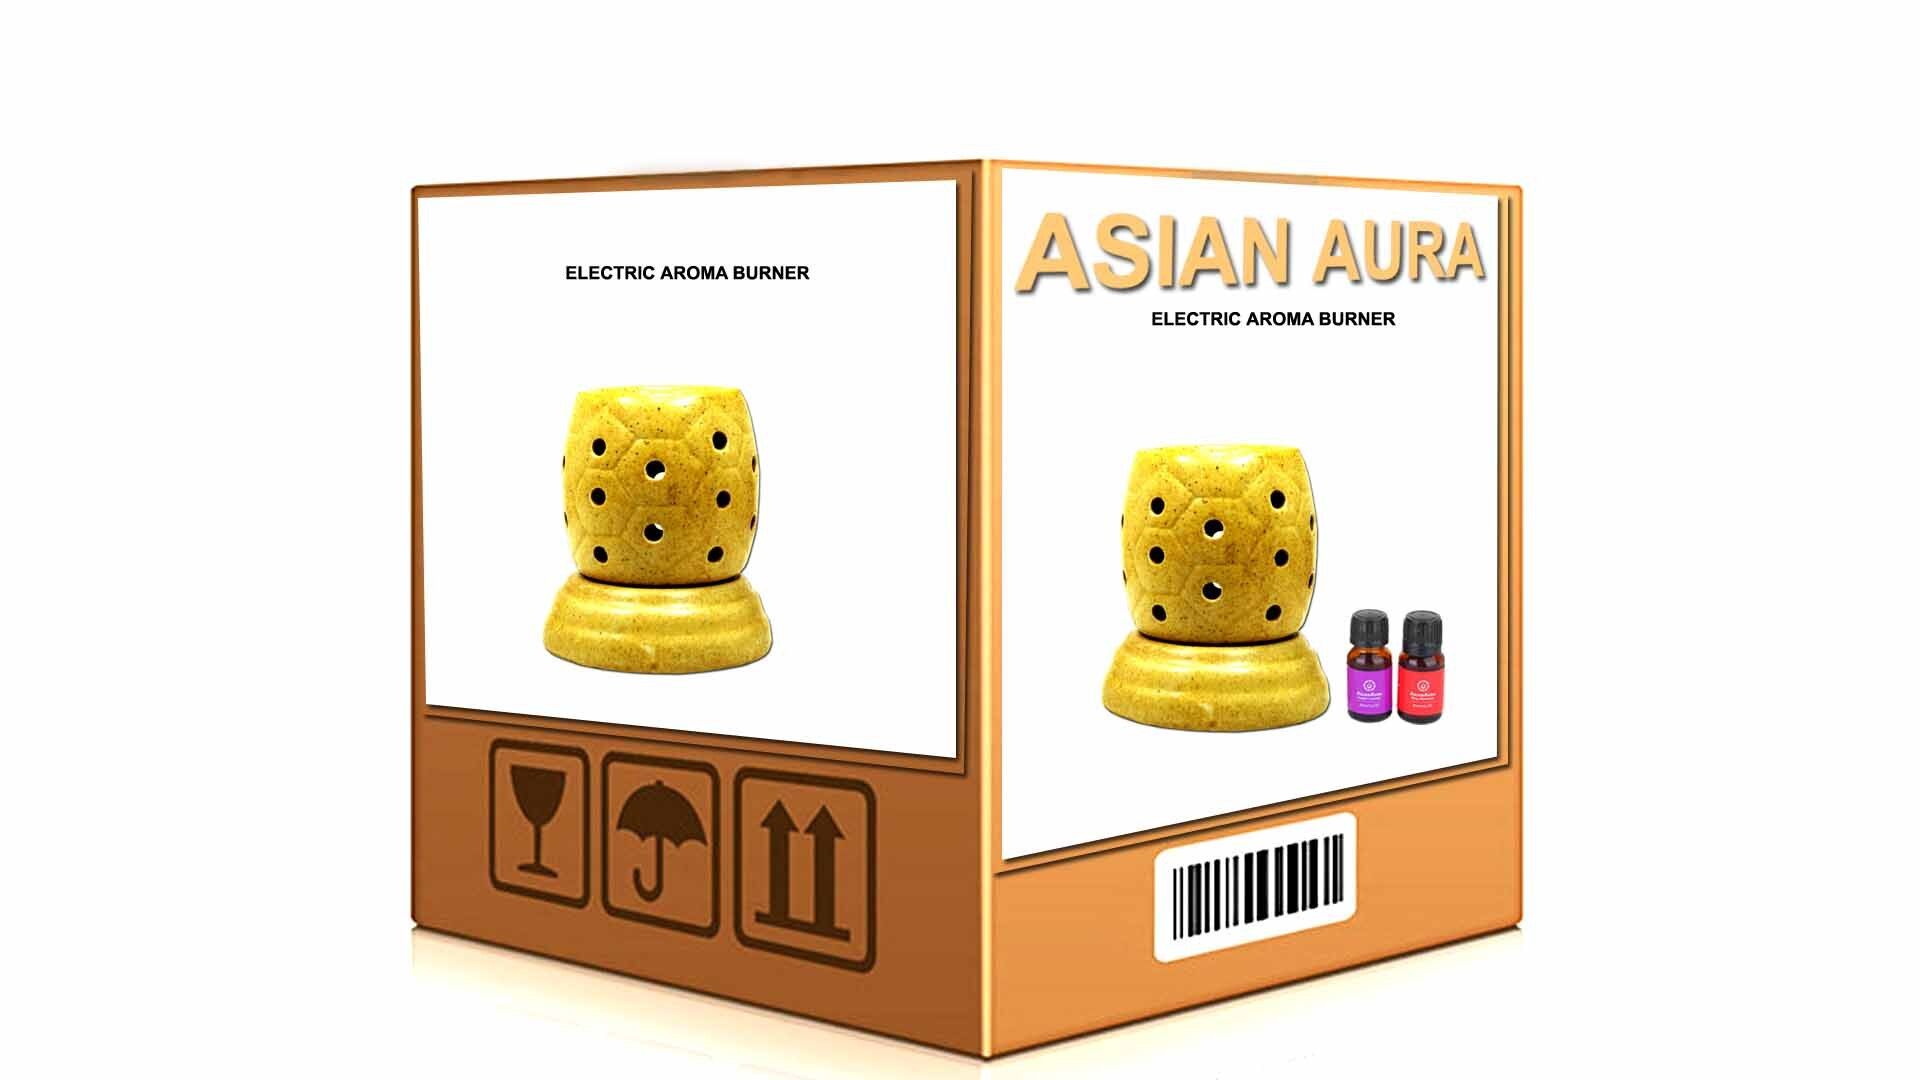 Asian Aura Ceramic Aromatic Oil Diffuser with 2 oil bottles AAEB 0011-B